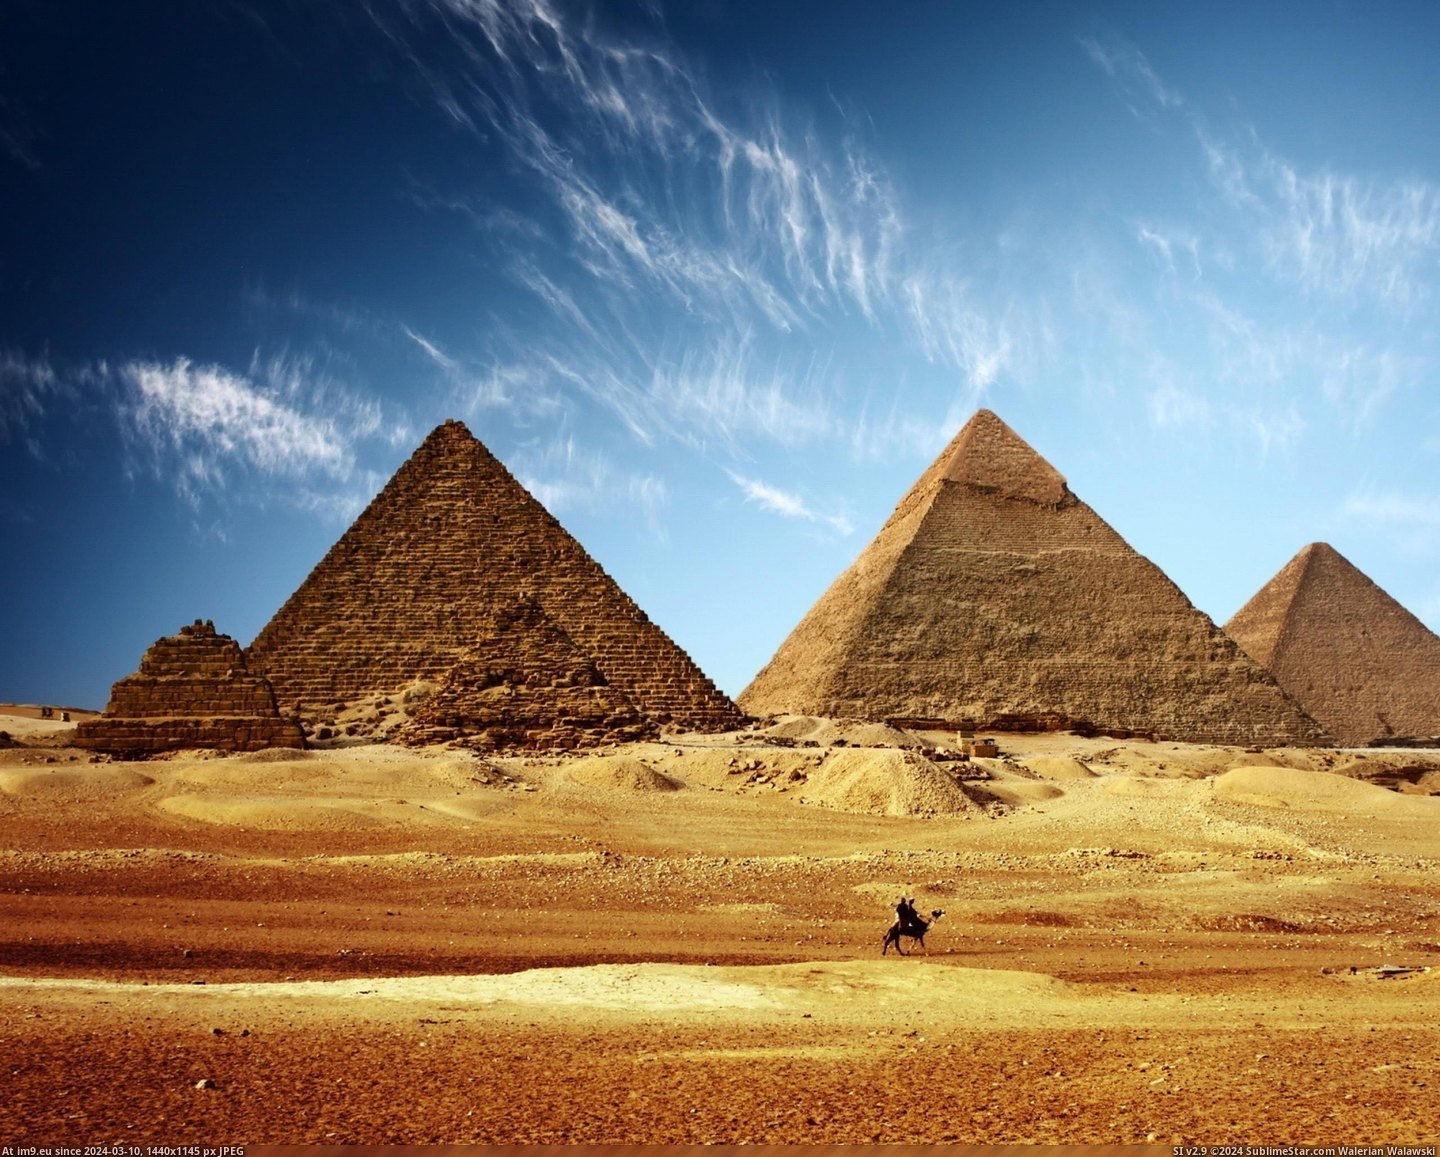 #Wallpaper #Beautiful #Blue #Sand #Pyramid #Egypt #2560x2048 #Wide #Golden #Sky Egypt - pyramid, golden sand and blue sky (Wallpaper 2560x2048) Pic. (Obraz z album Rehost))